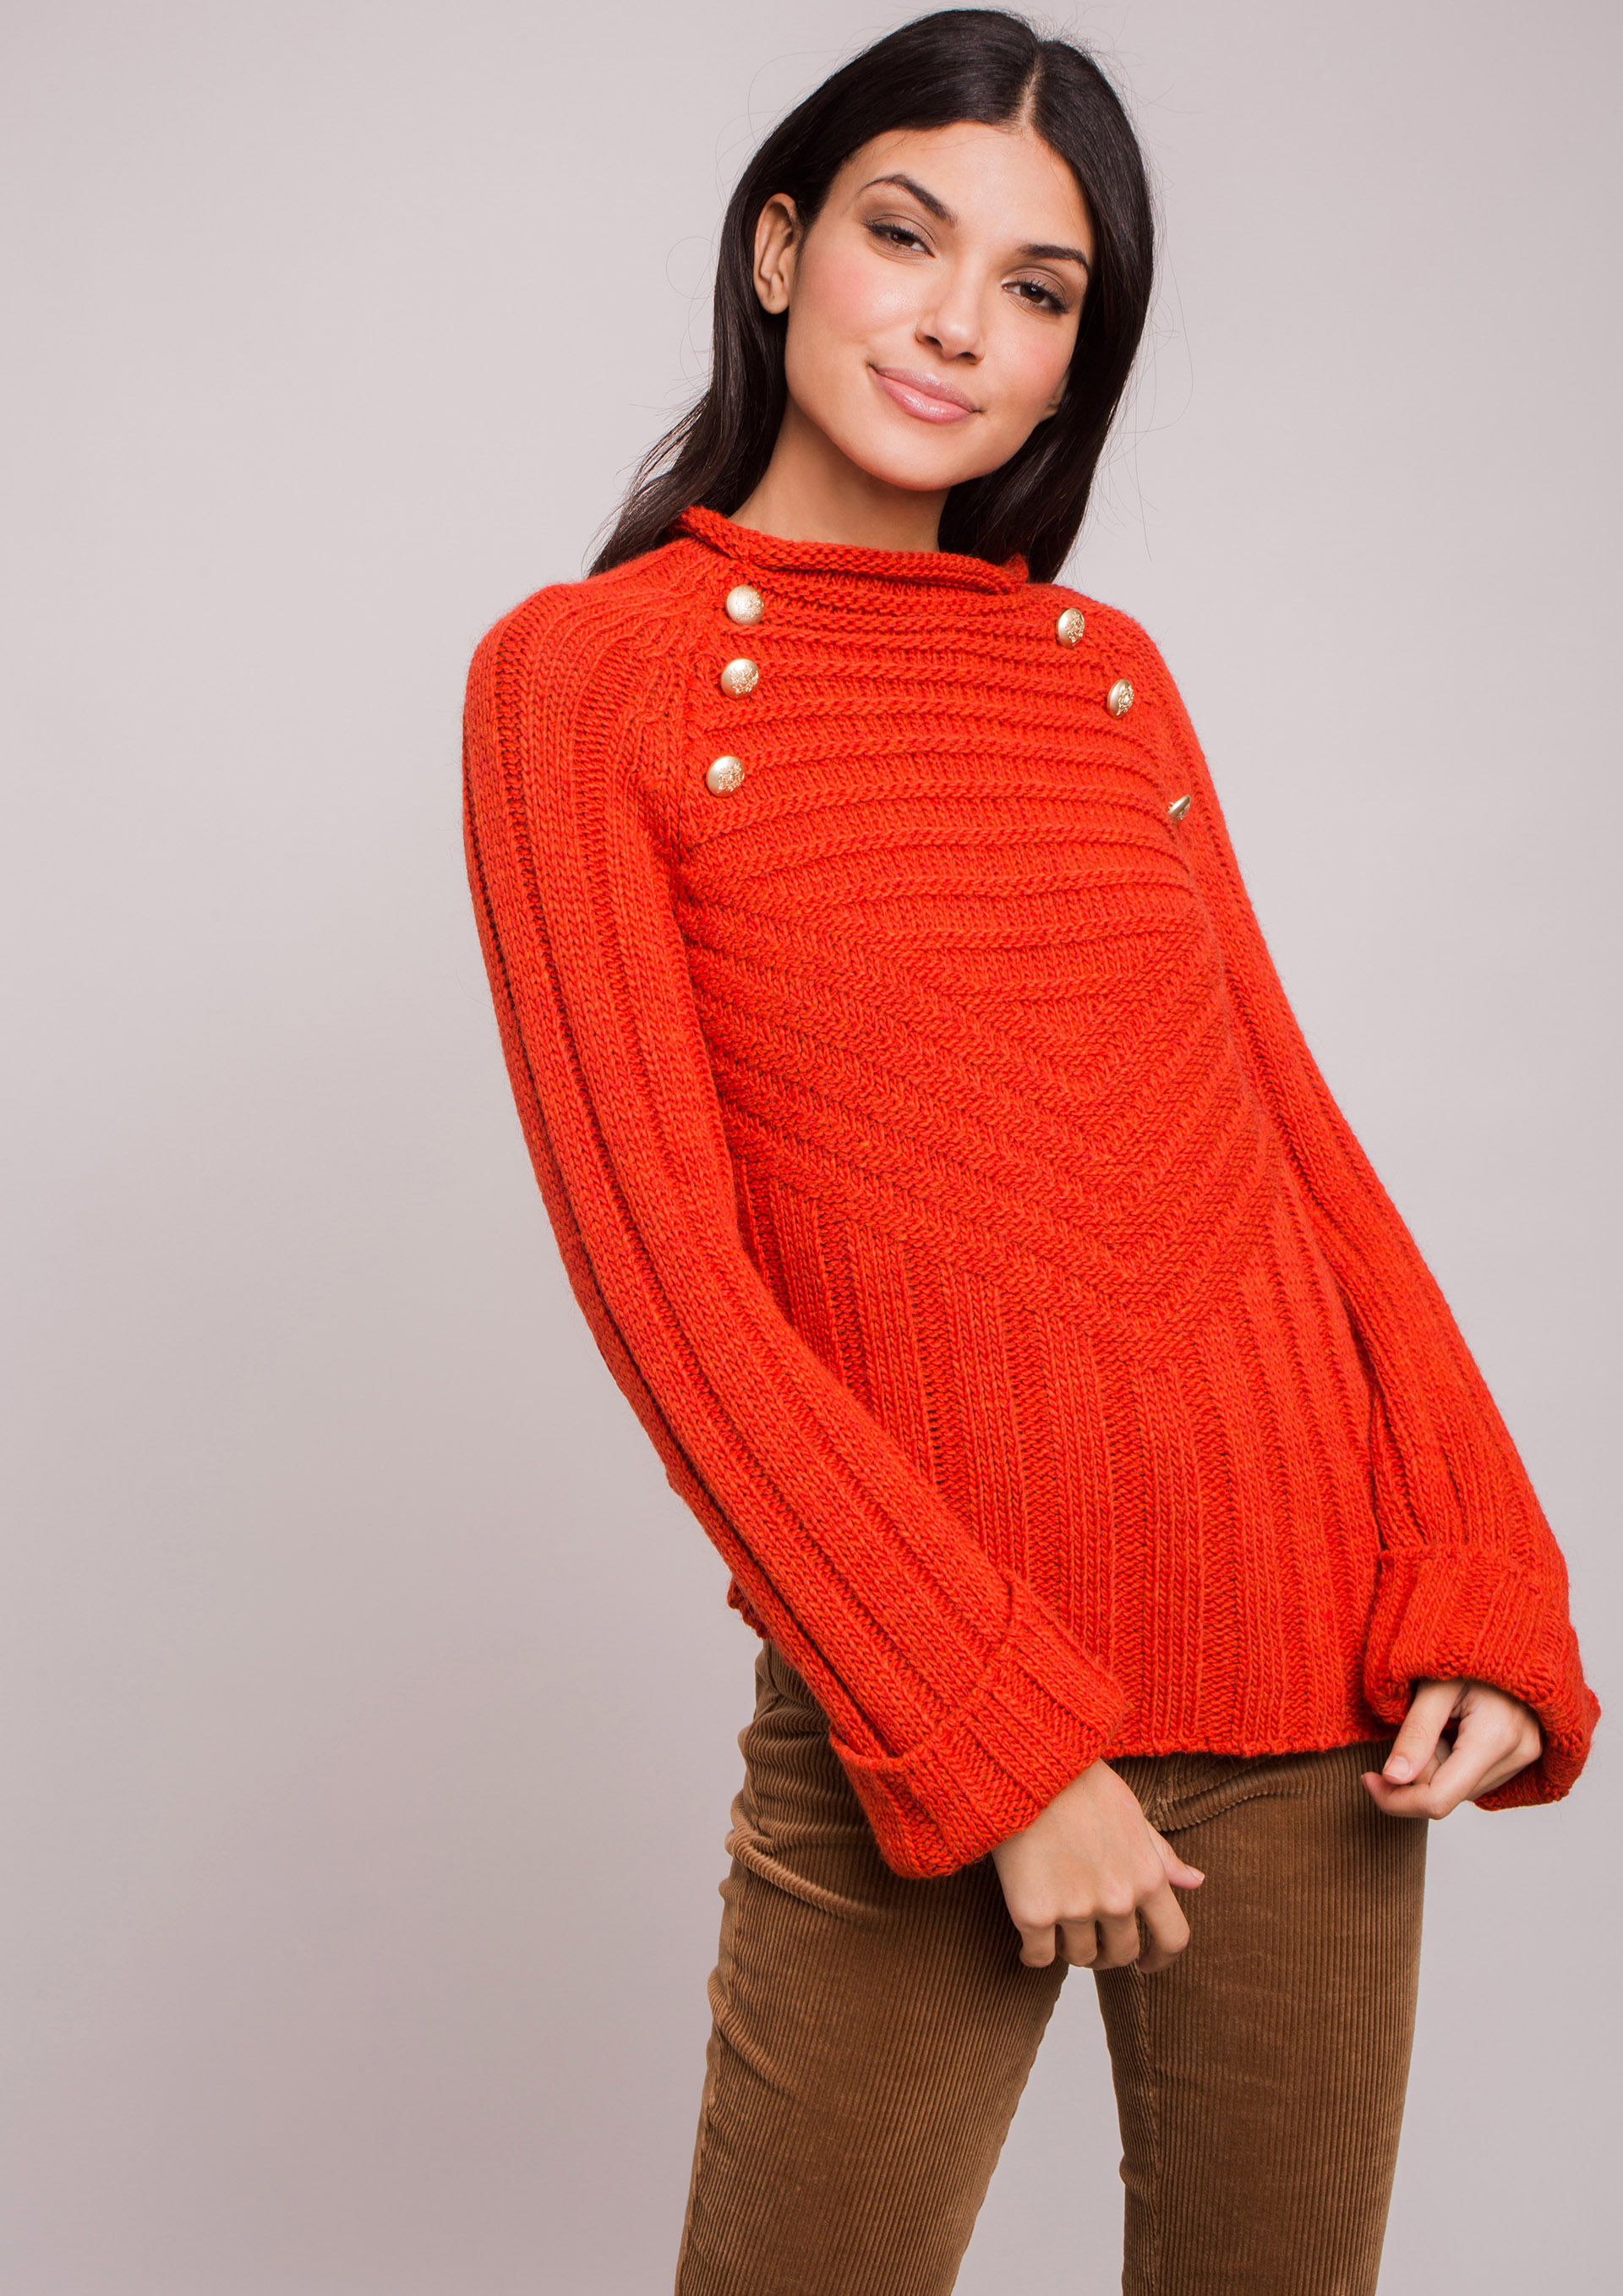 Orange knit sweater.